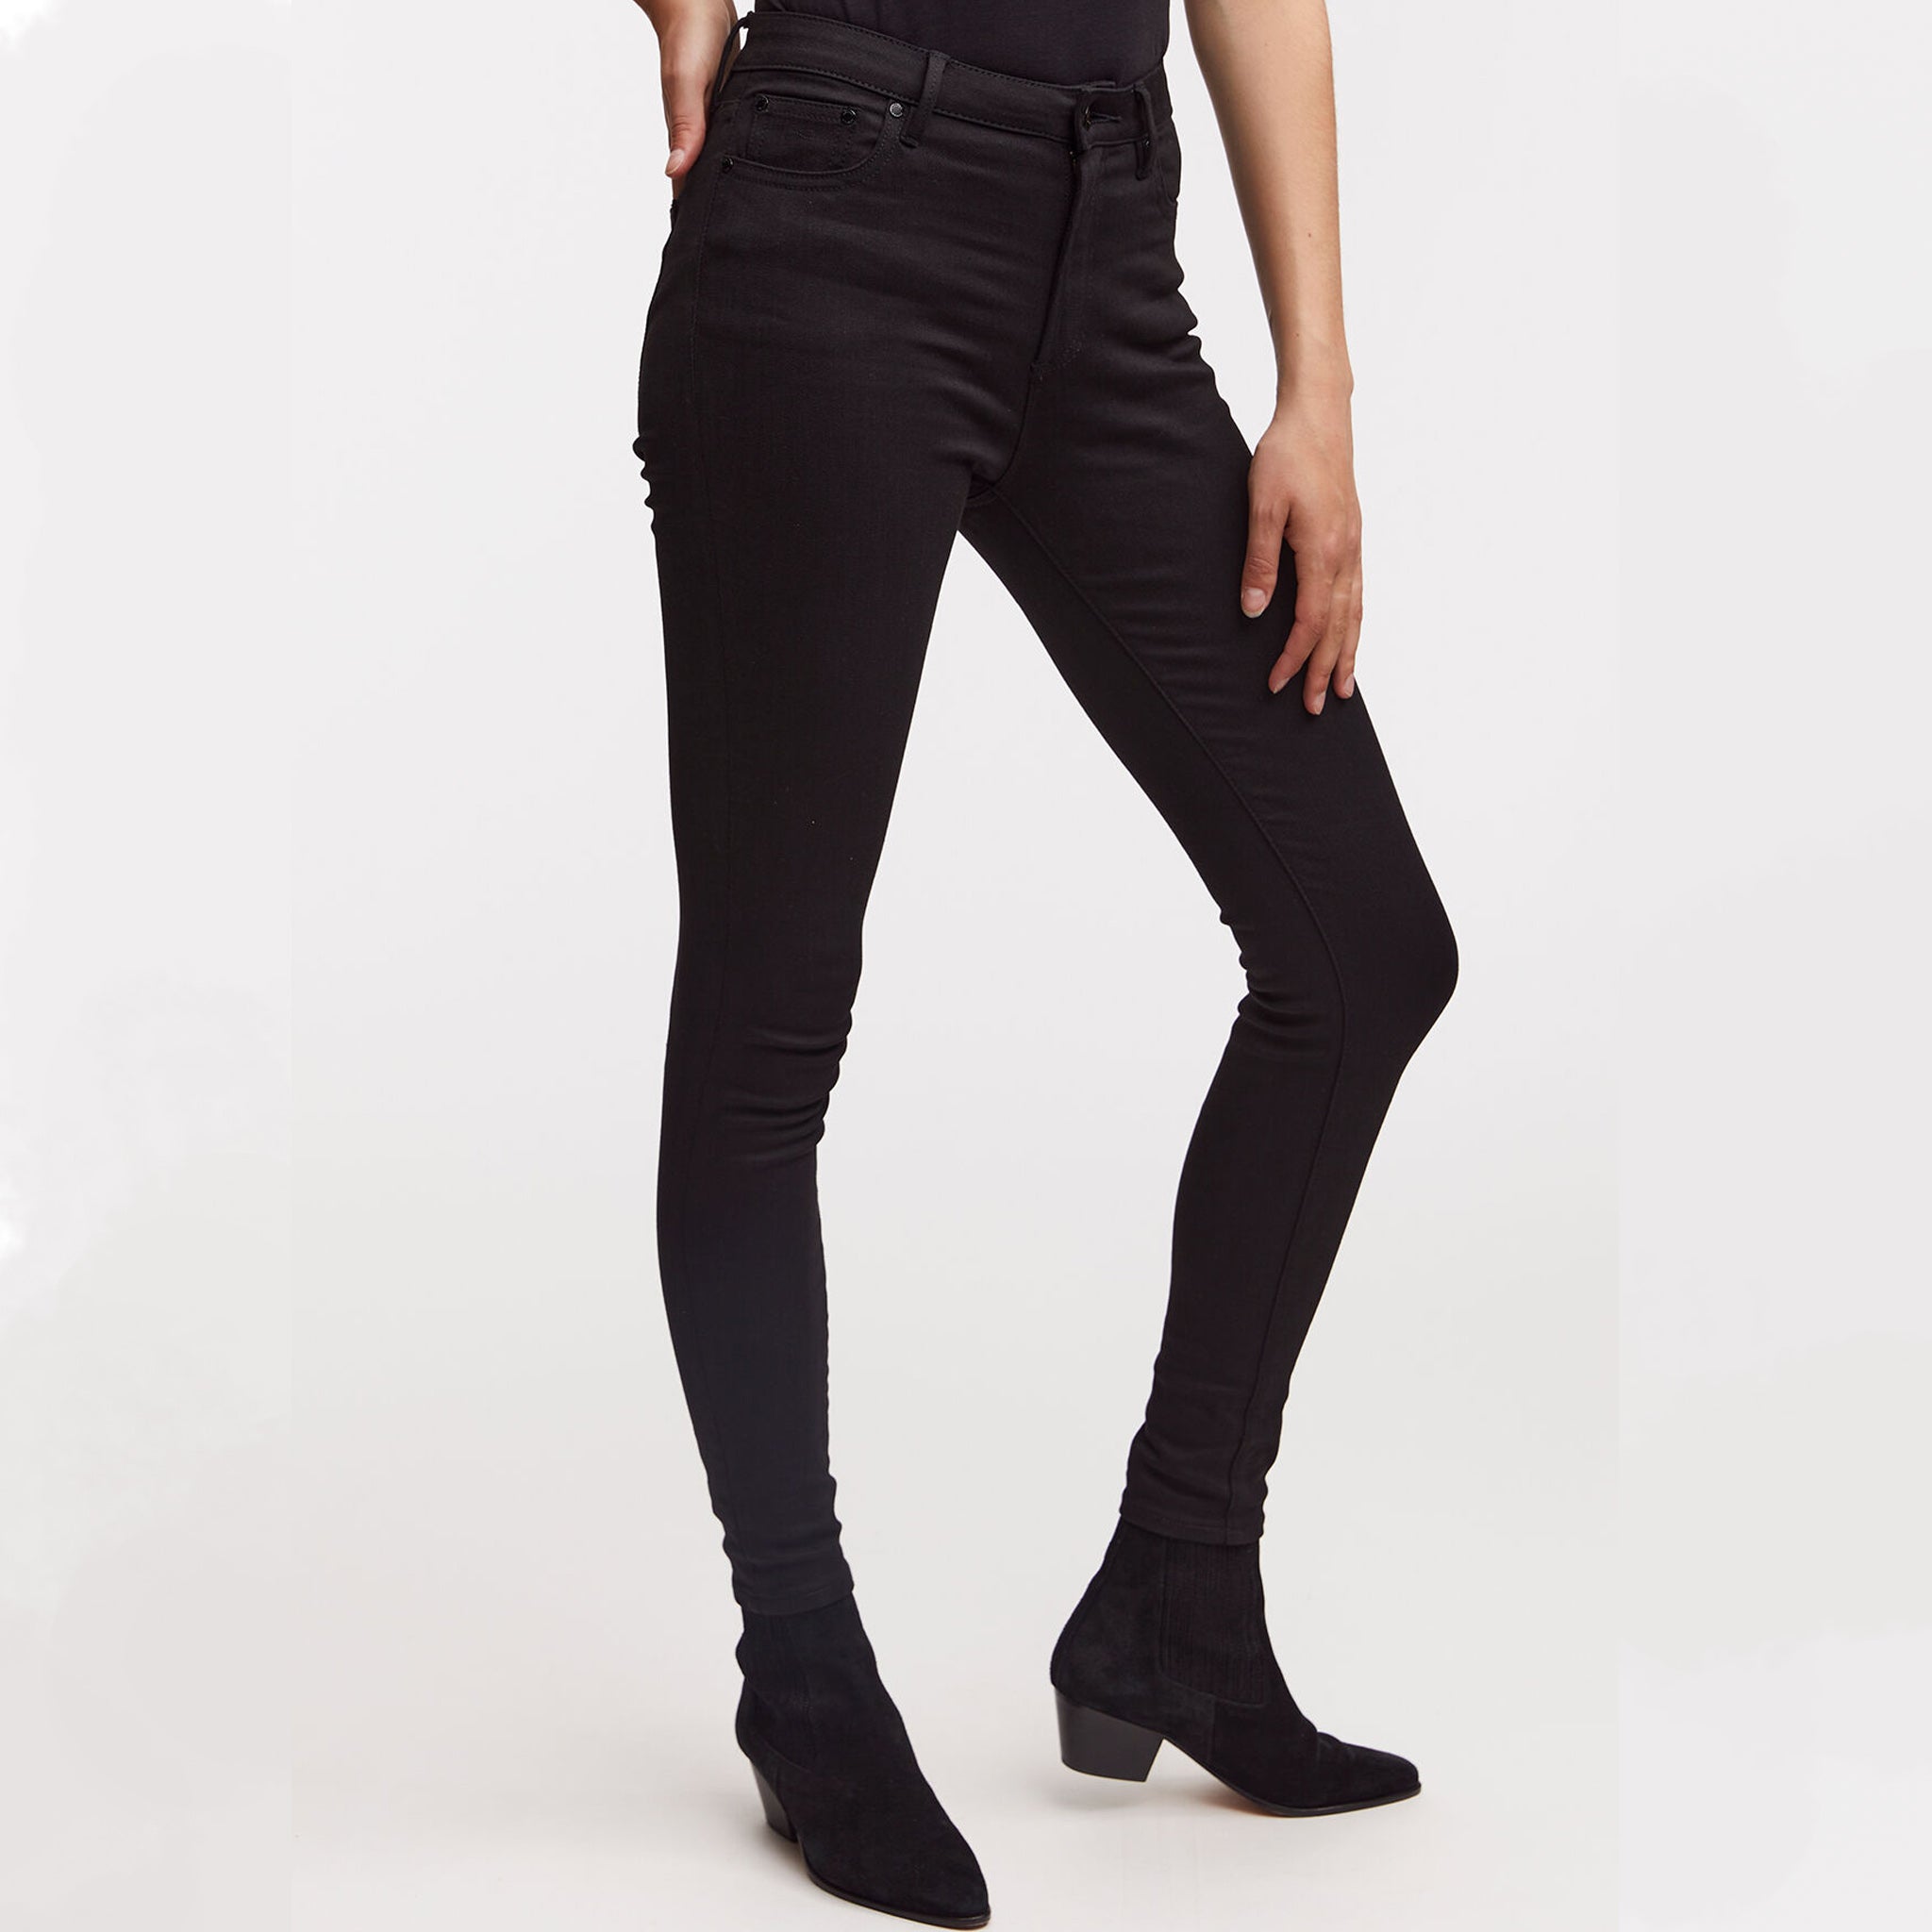 A woman wearing NEEDLE Skinny - True Black denim jeans by Denham and an indigo denim top.